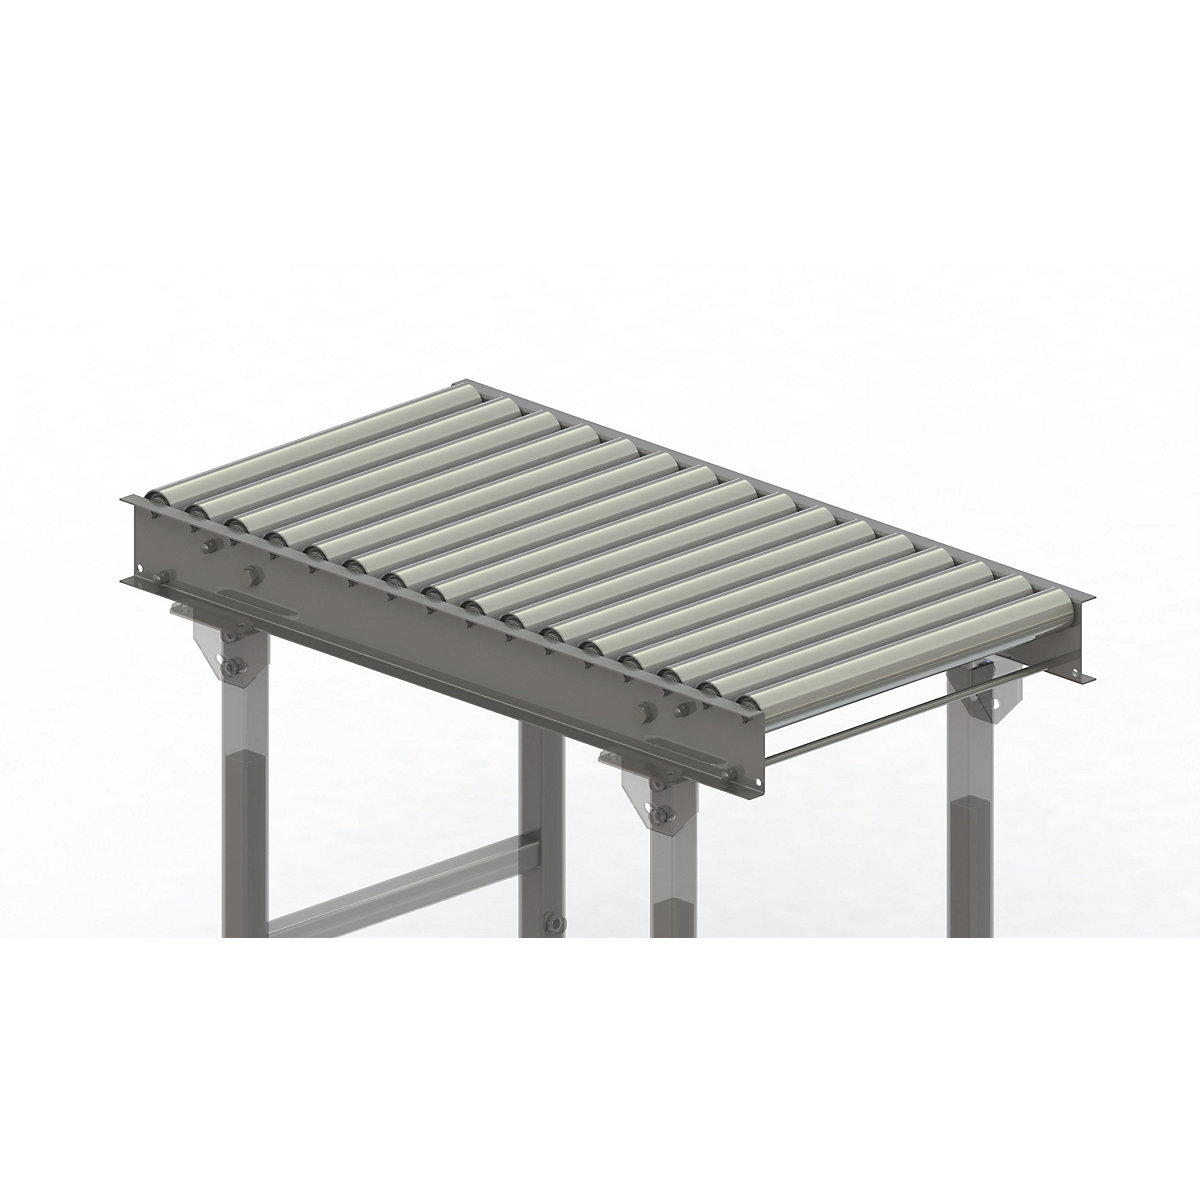 Gura – Roller conveyor, steel frame with zinc plated steel rollers, track width 500 mm, distance between axles 62.5 mm, length 1 m